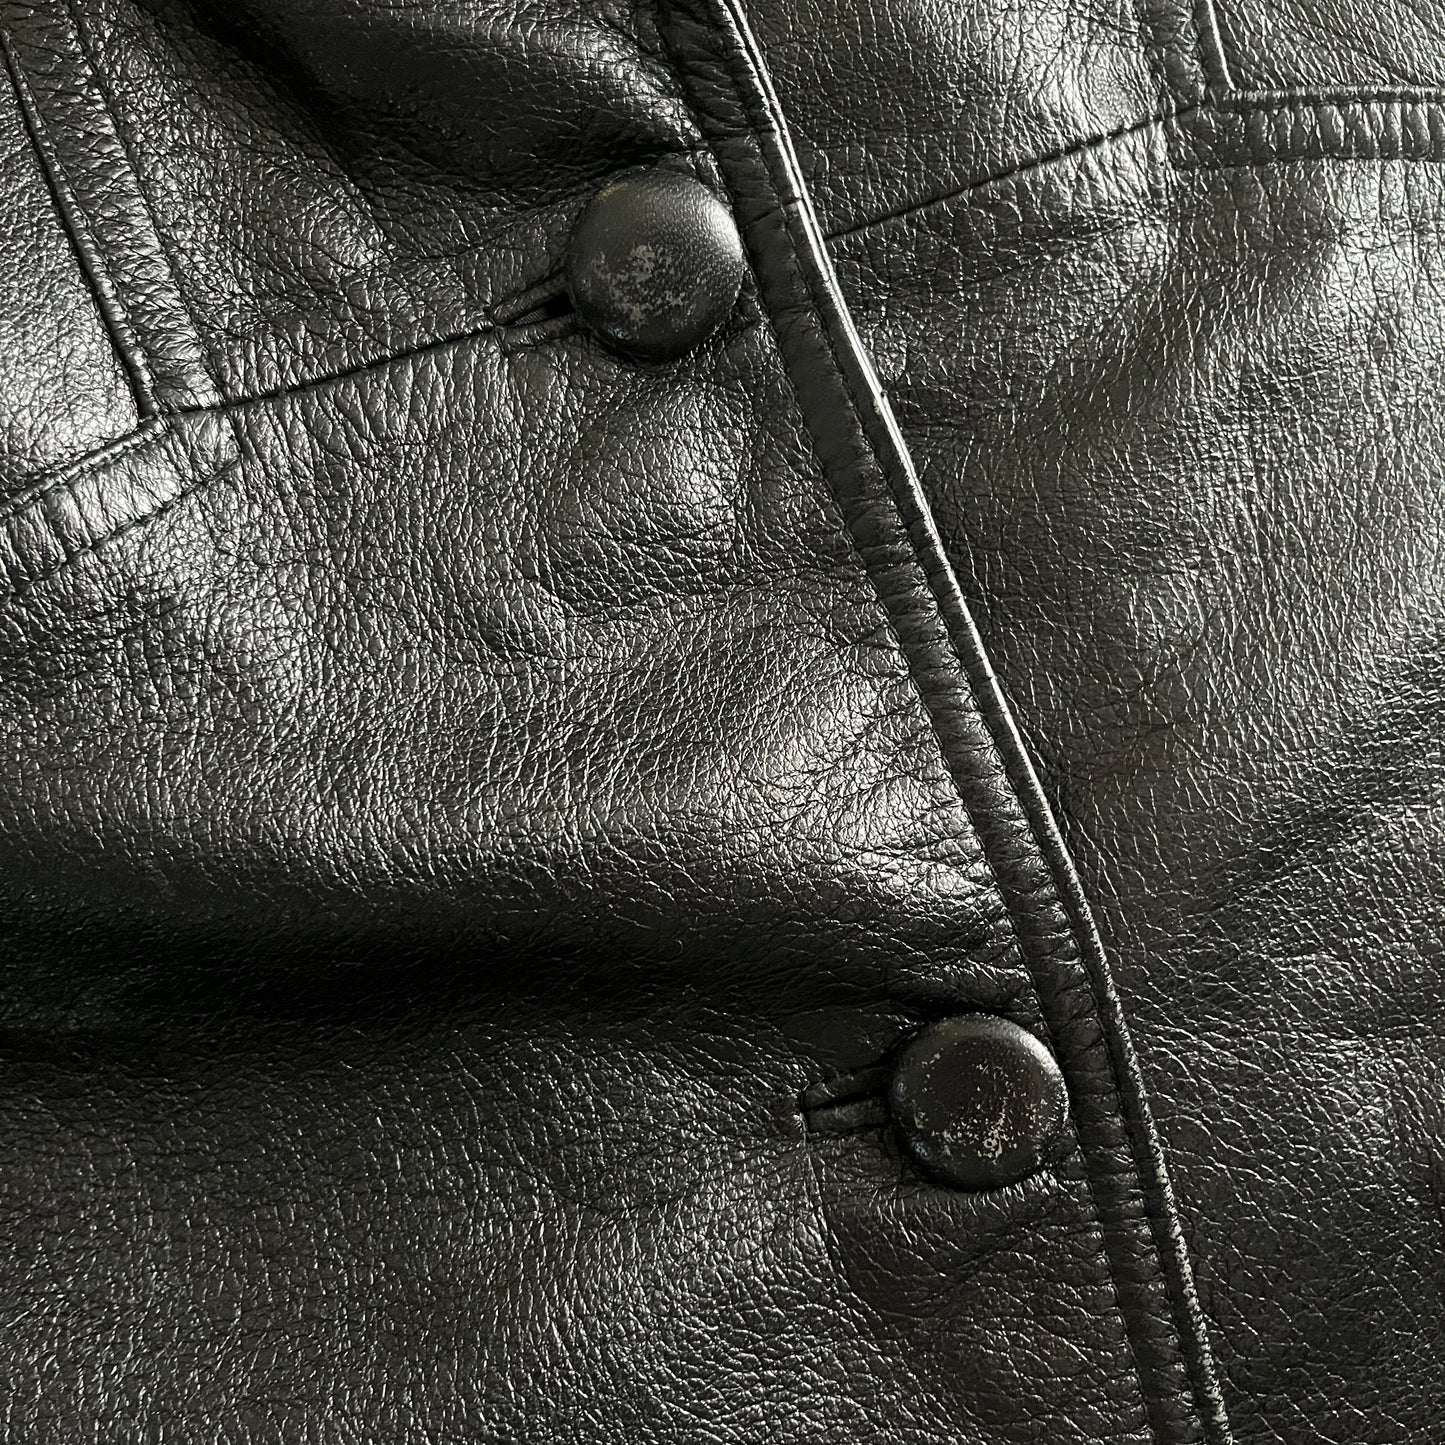 moda italiana ブラック モード変形レザーテーラードジャケット